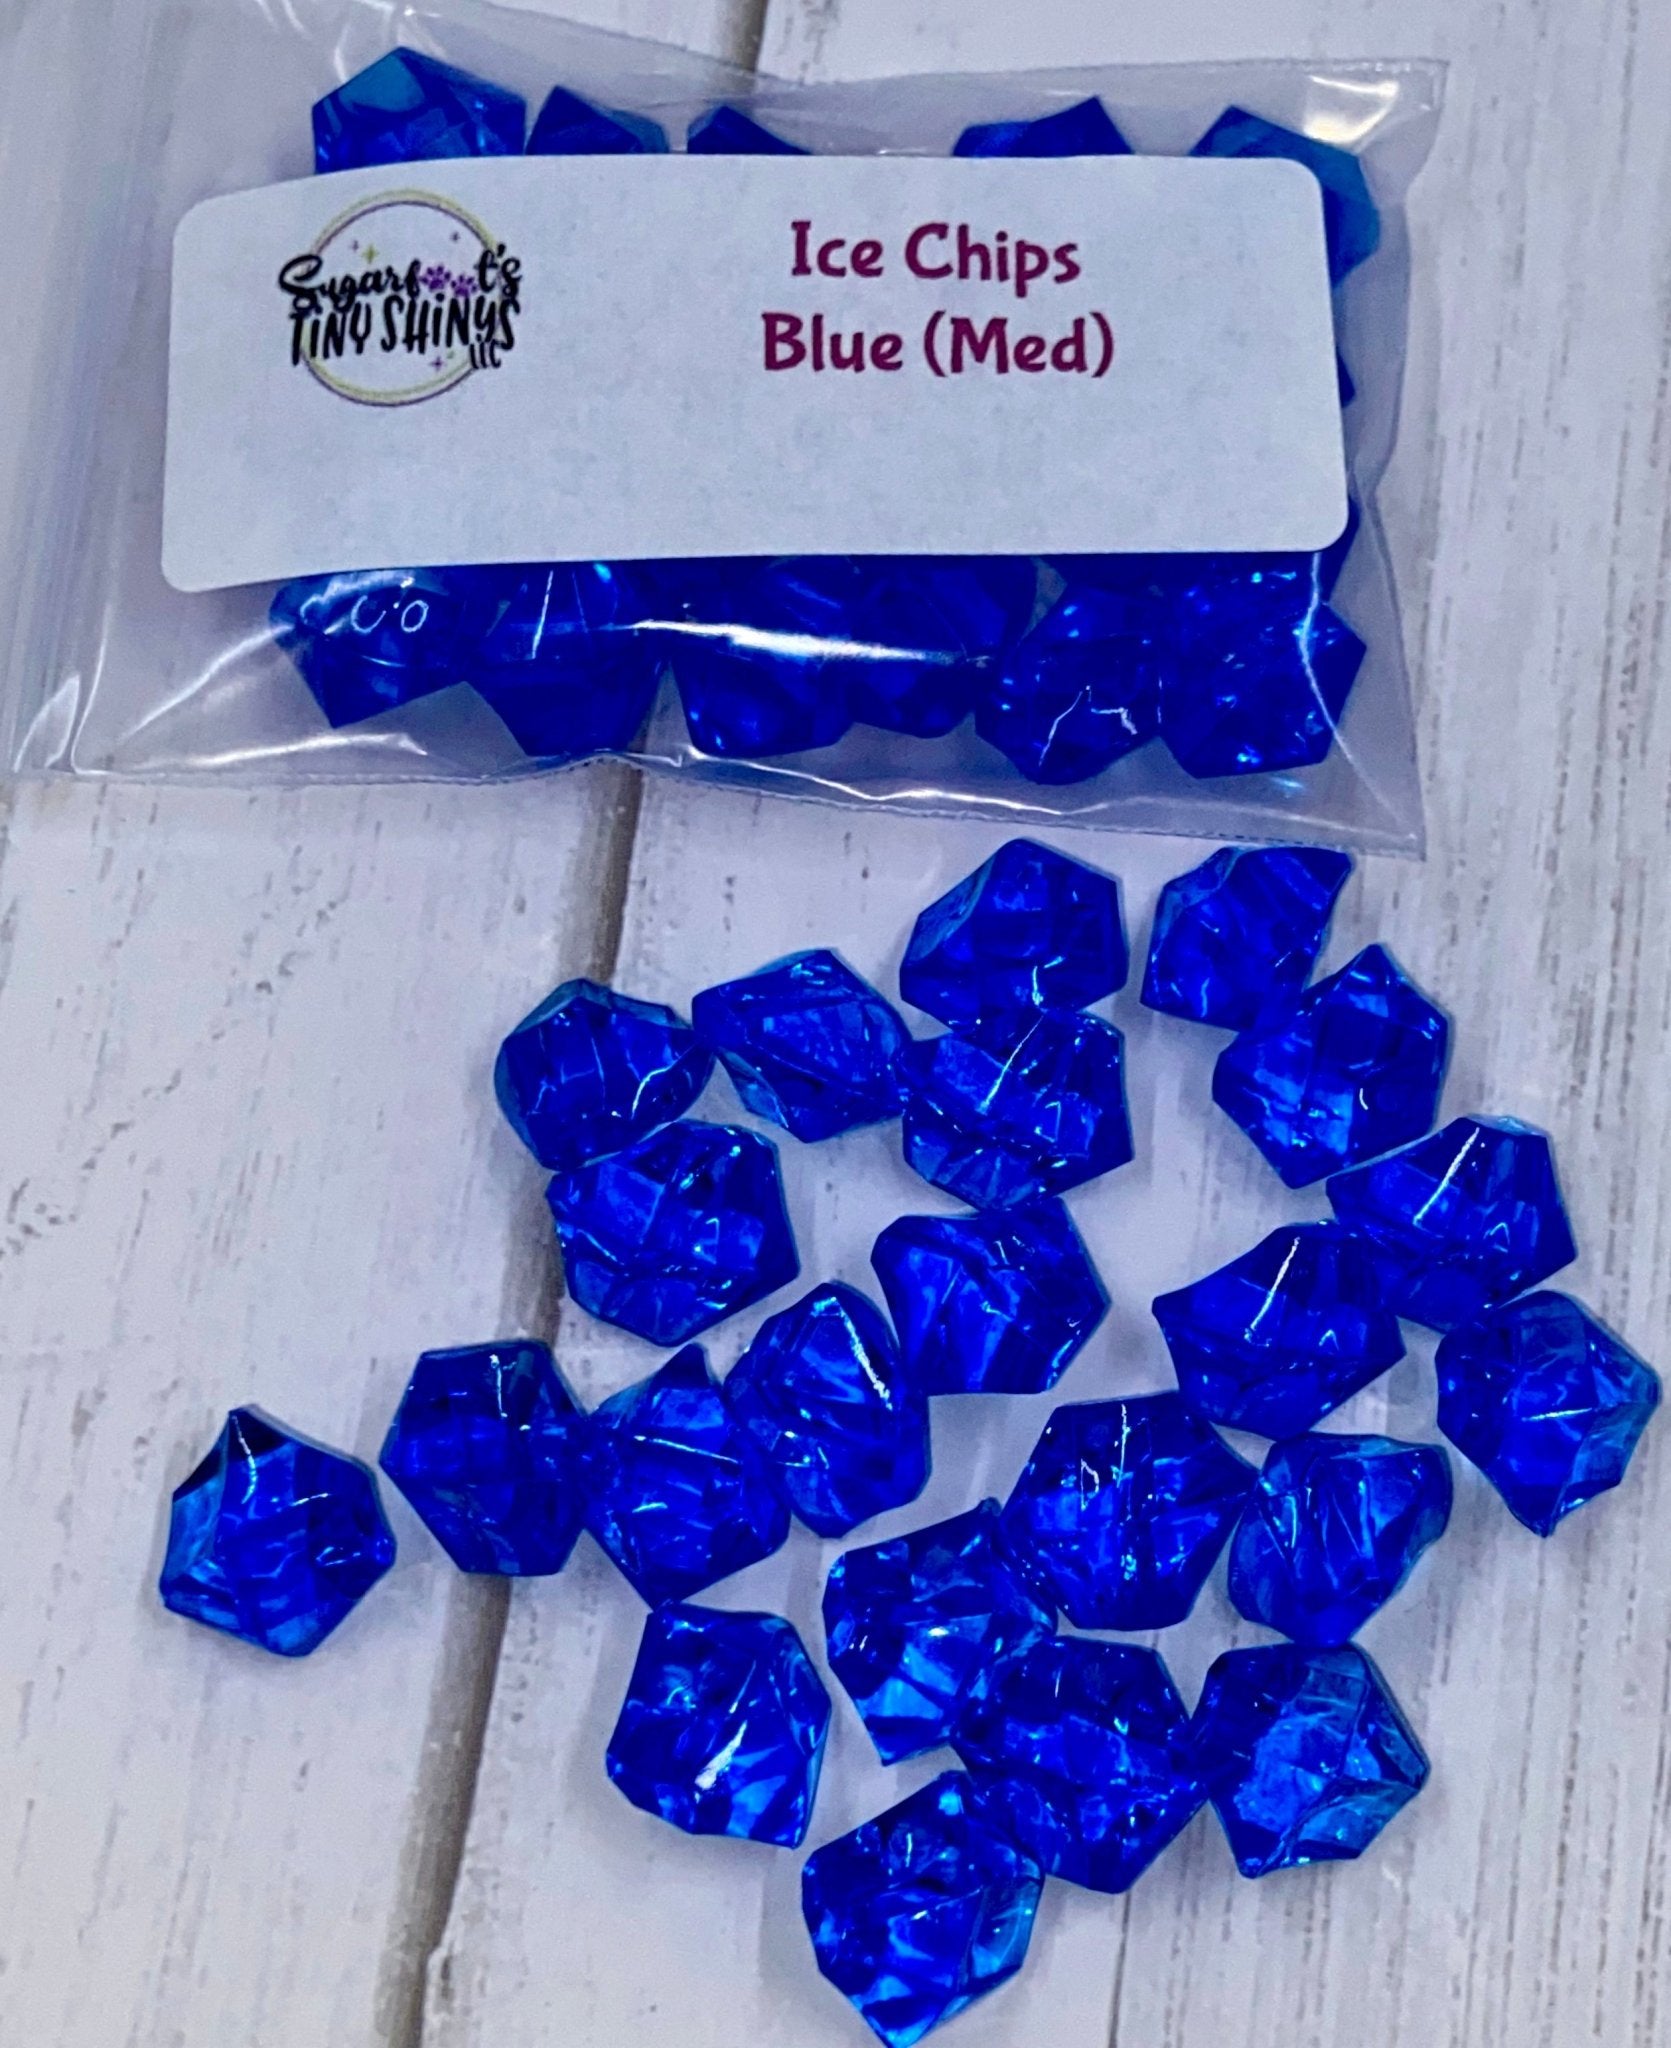 Blue Ice Chips (Medium) - Sugarfoot's Tiny Shinys, LLC